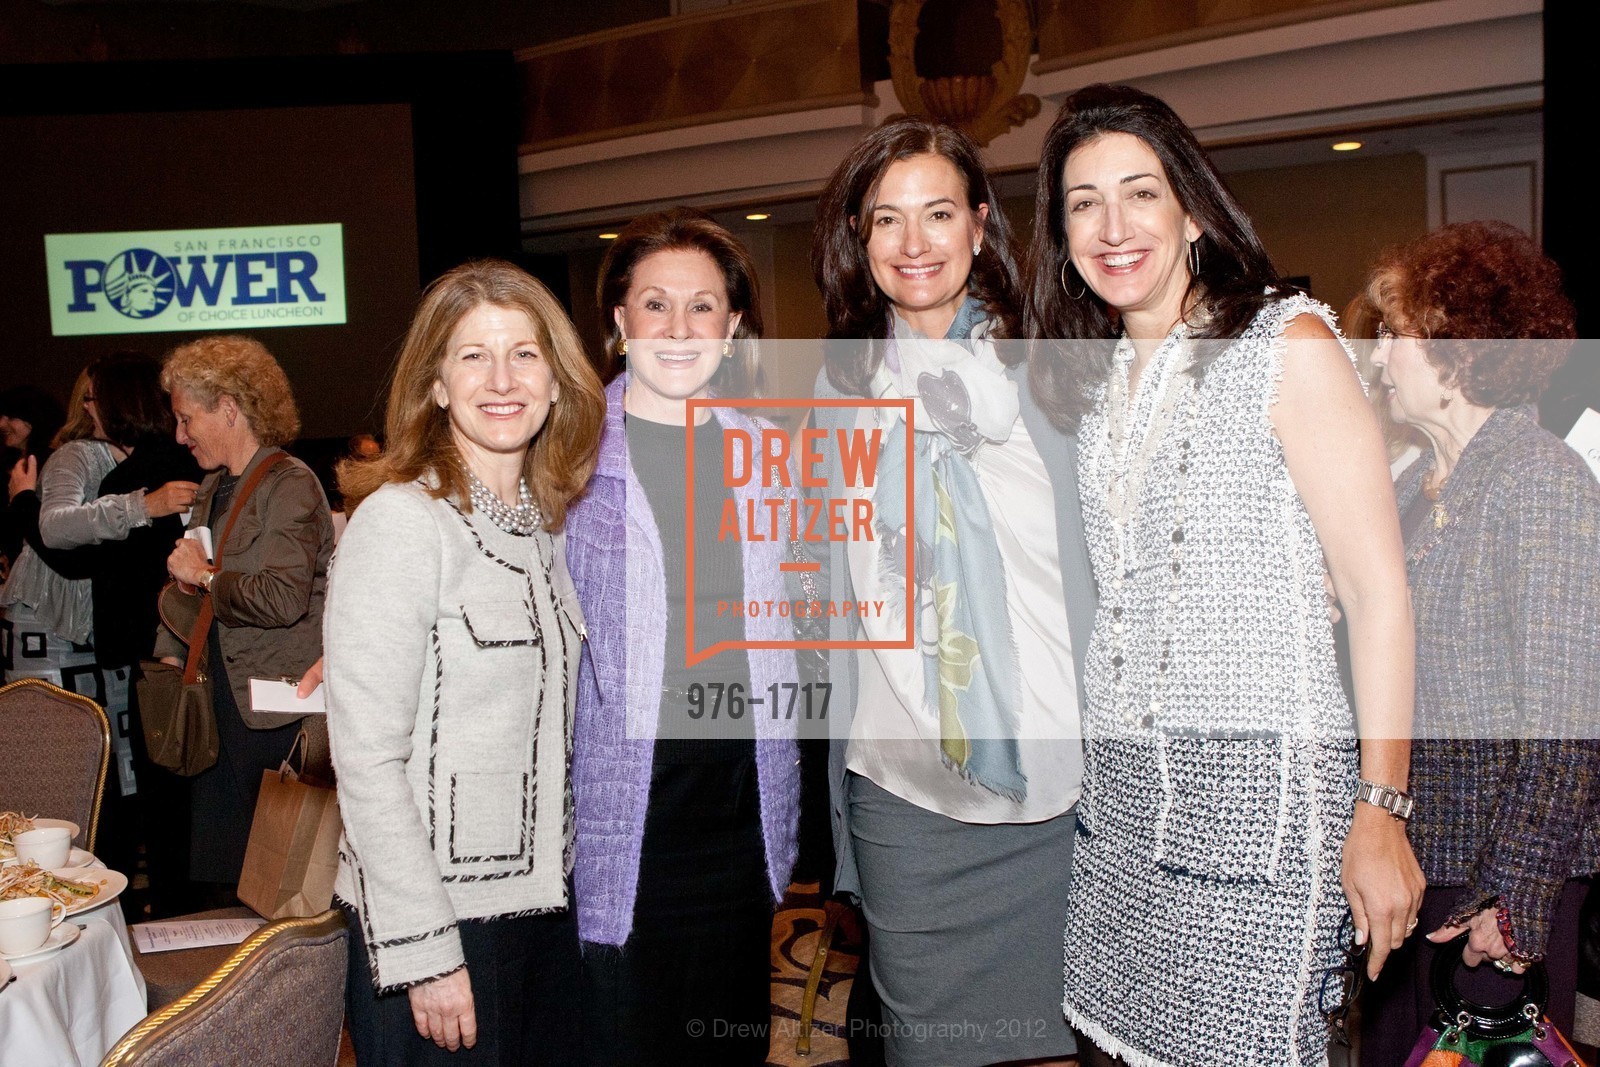 Diana Sansberg, Lucie Weissman, Angela Cohan, Pam Baer, Photo #976-1717